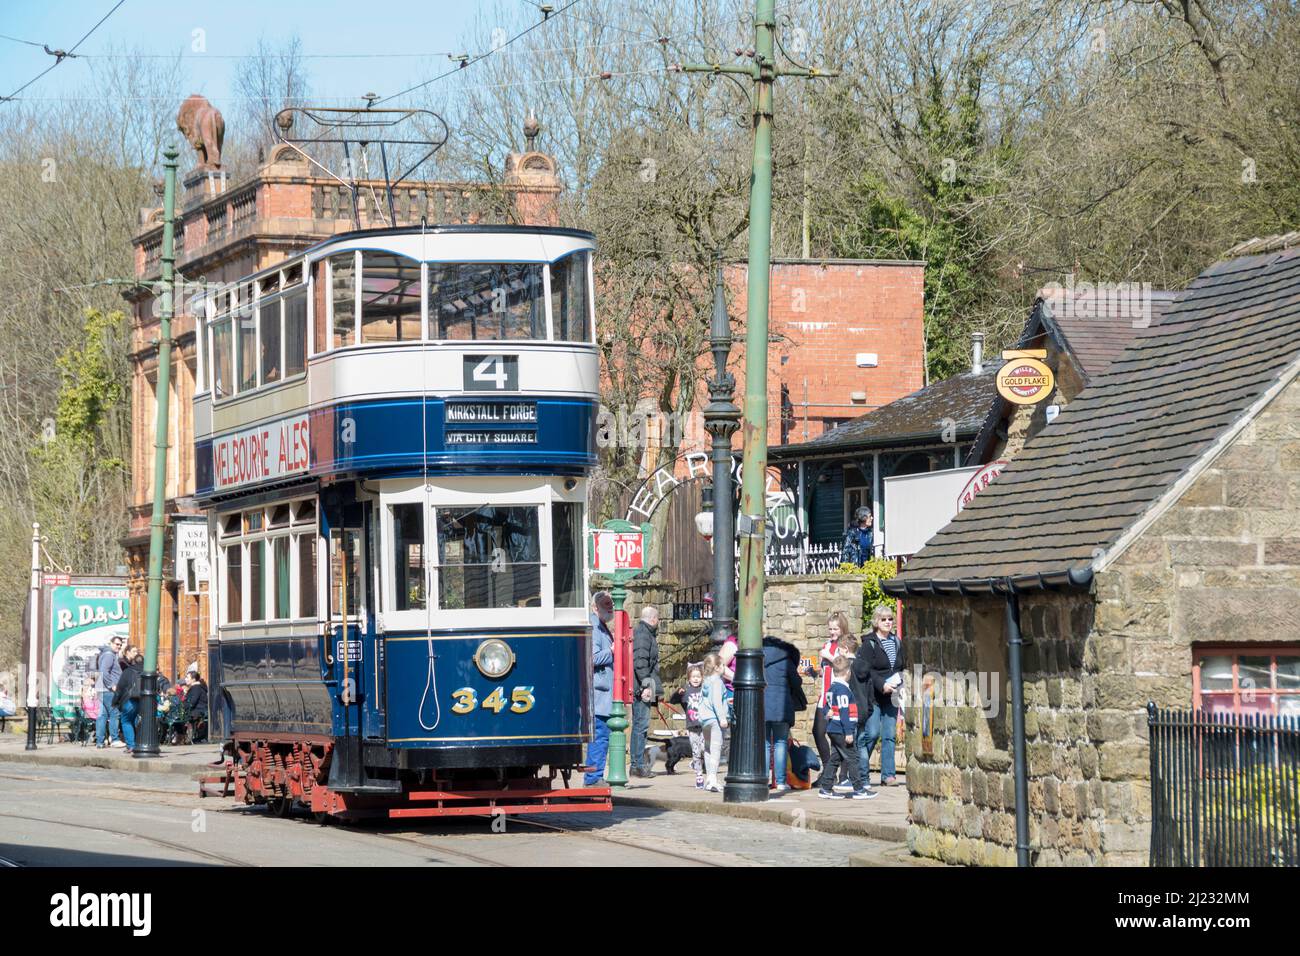 Derbyshire, UK – 5 April 2018: The 345 double decker vintage tram at the Red Lion tram stop, Crich Tramway Village Stock Photo